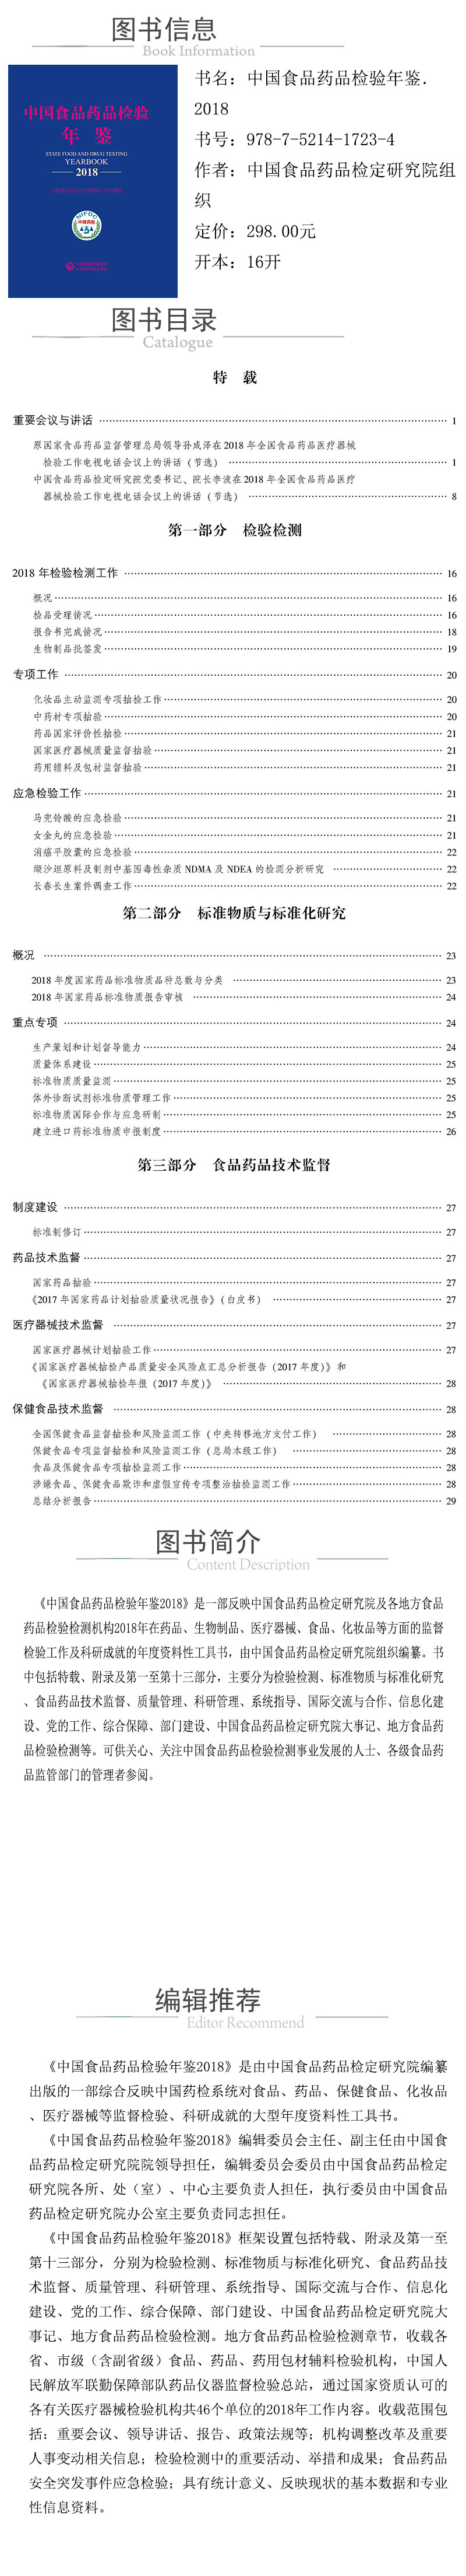 xcy---978-7-5214-1723-4---中国食品药品检验年鉴．2018.jpg